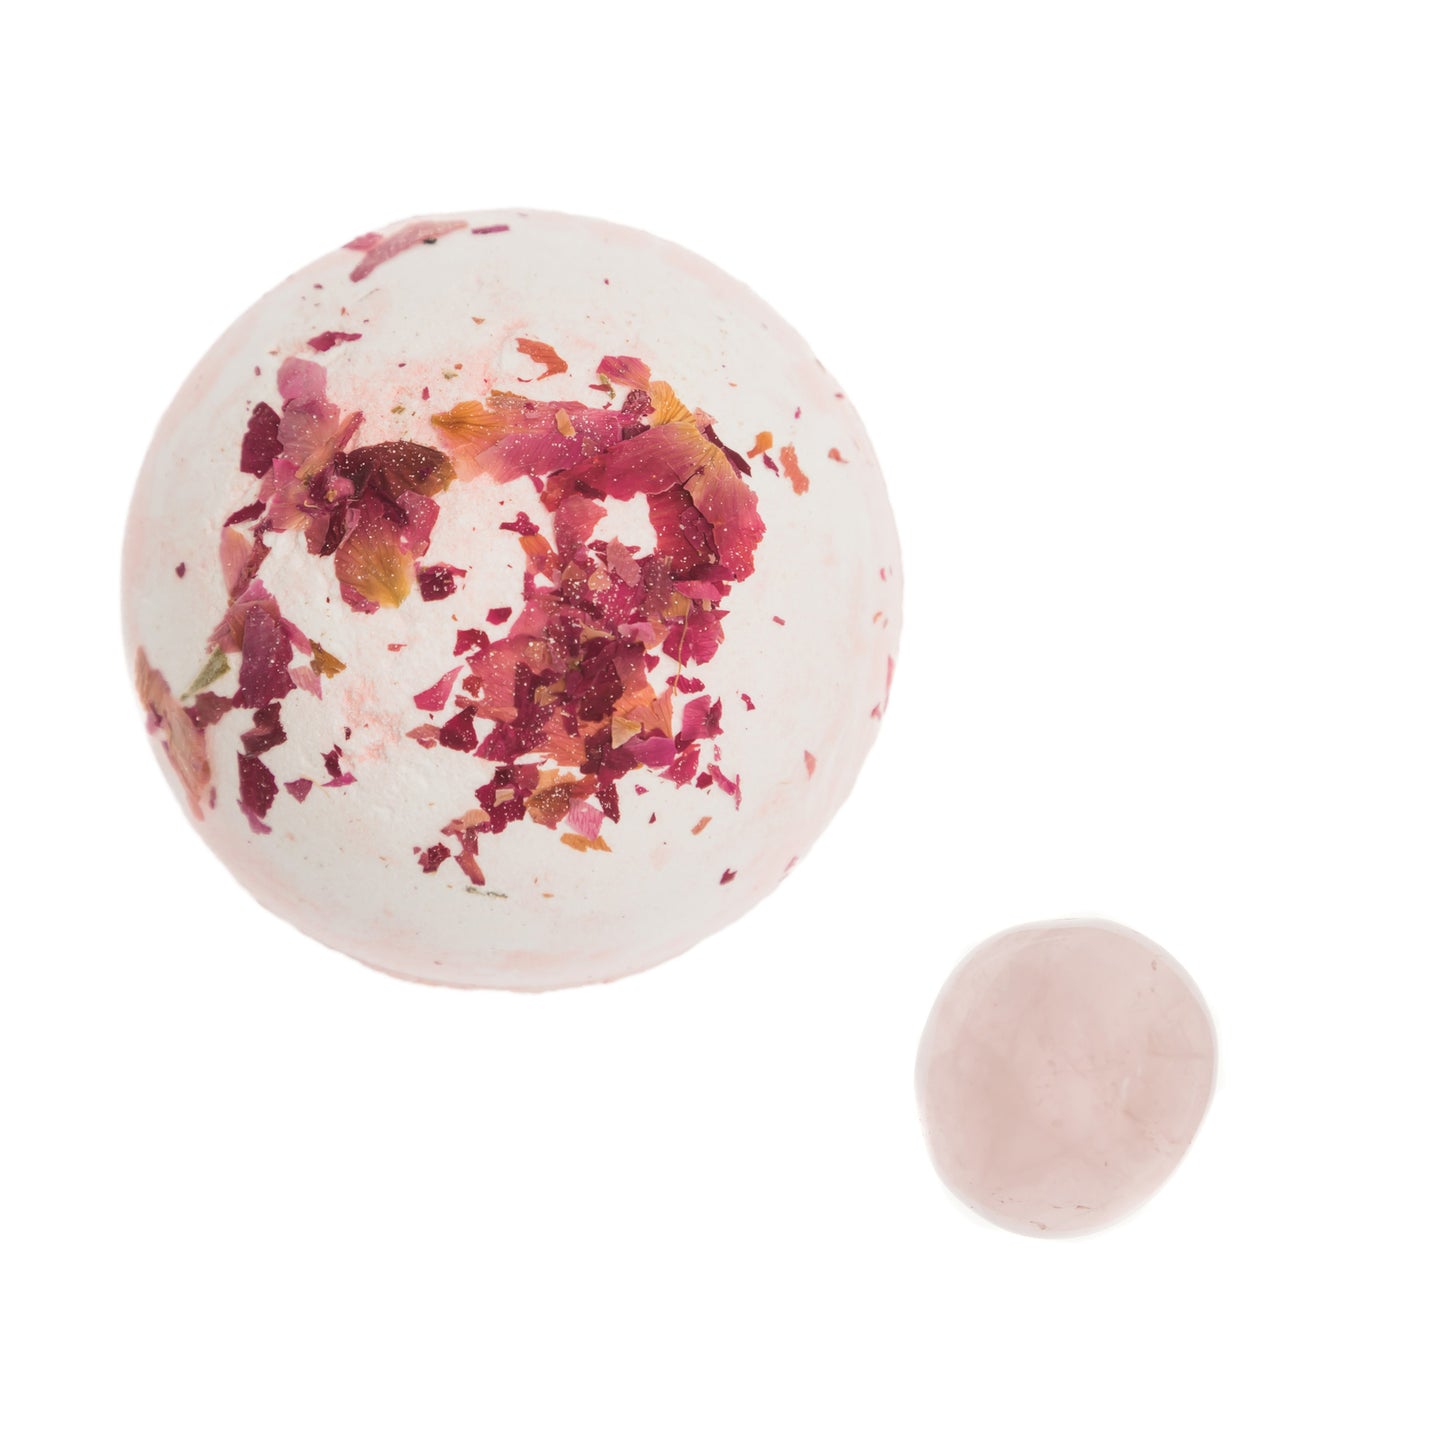 LWK Bath bomb surprise crystal, rose quartz, rose petal, rose scent,